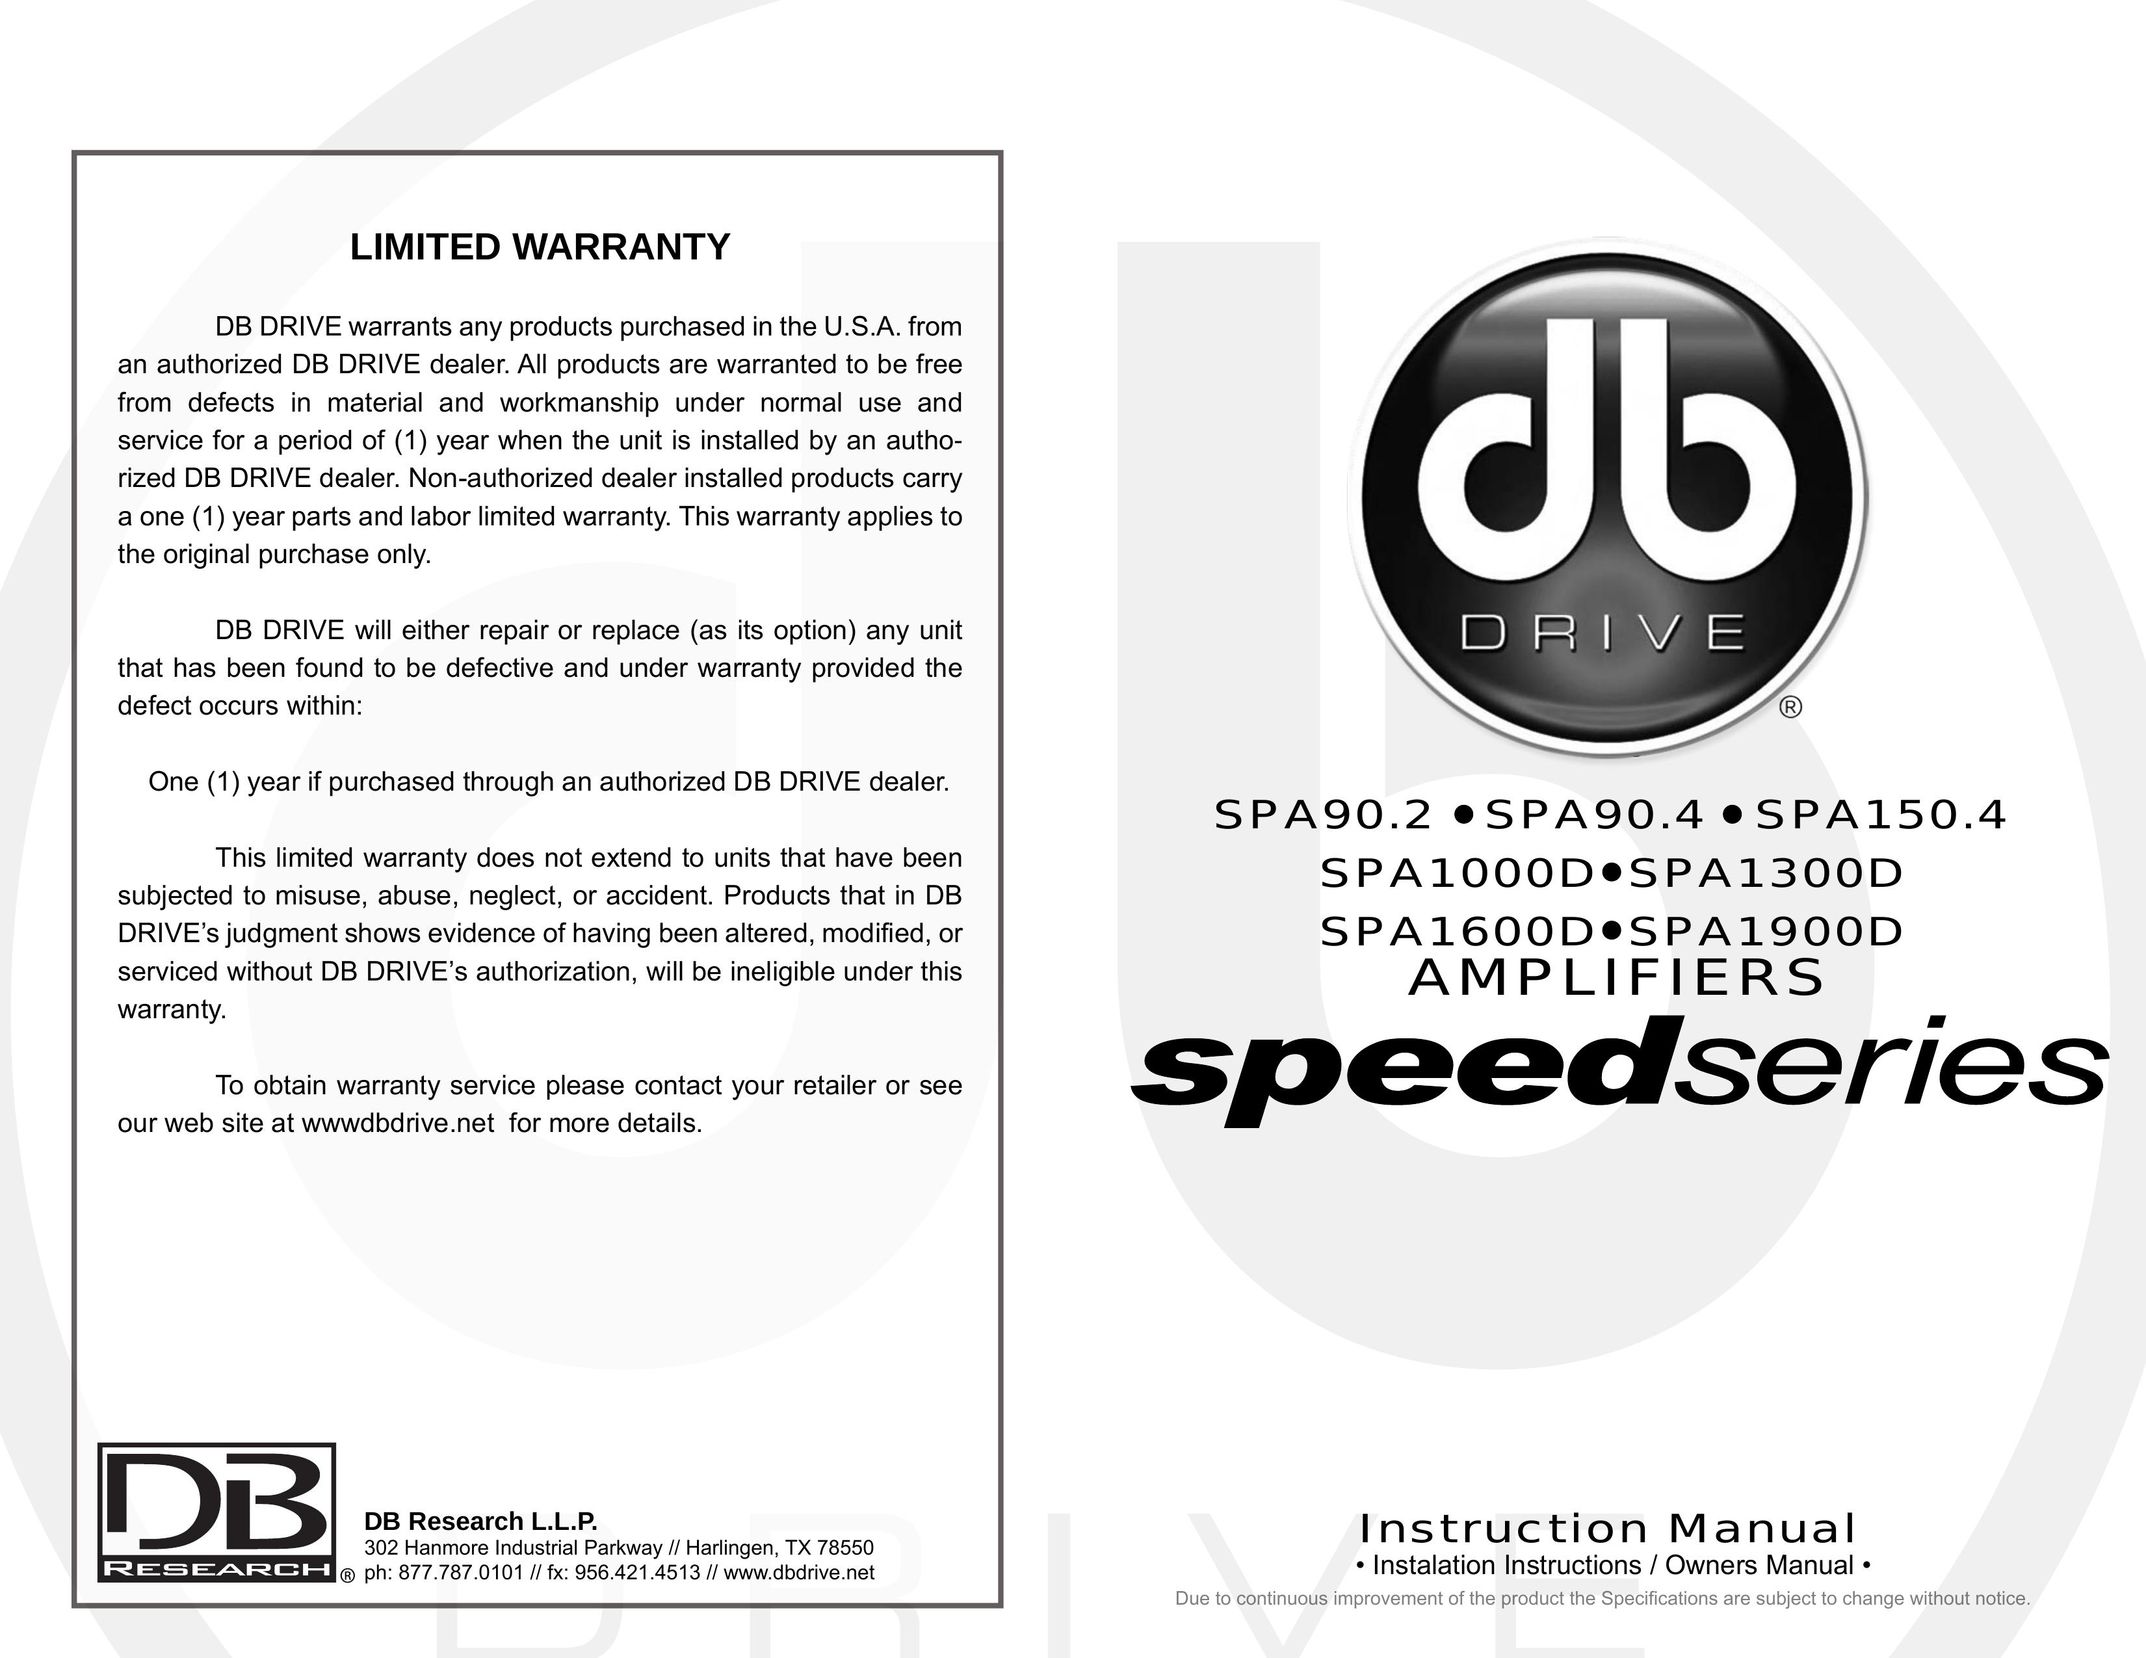 Broan SPA1900D Car Amplifier User Manual